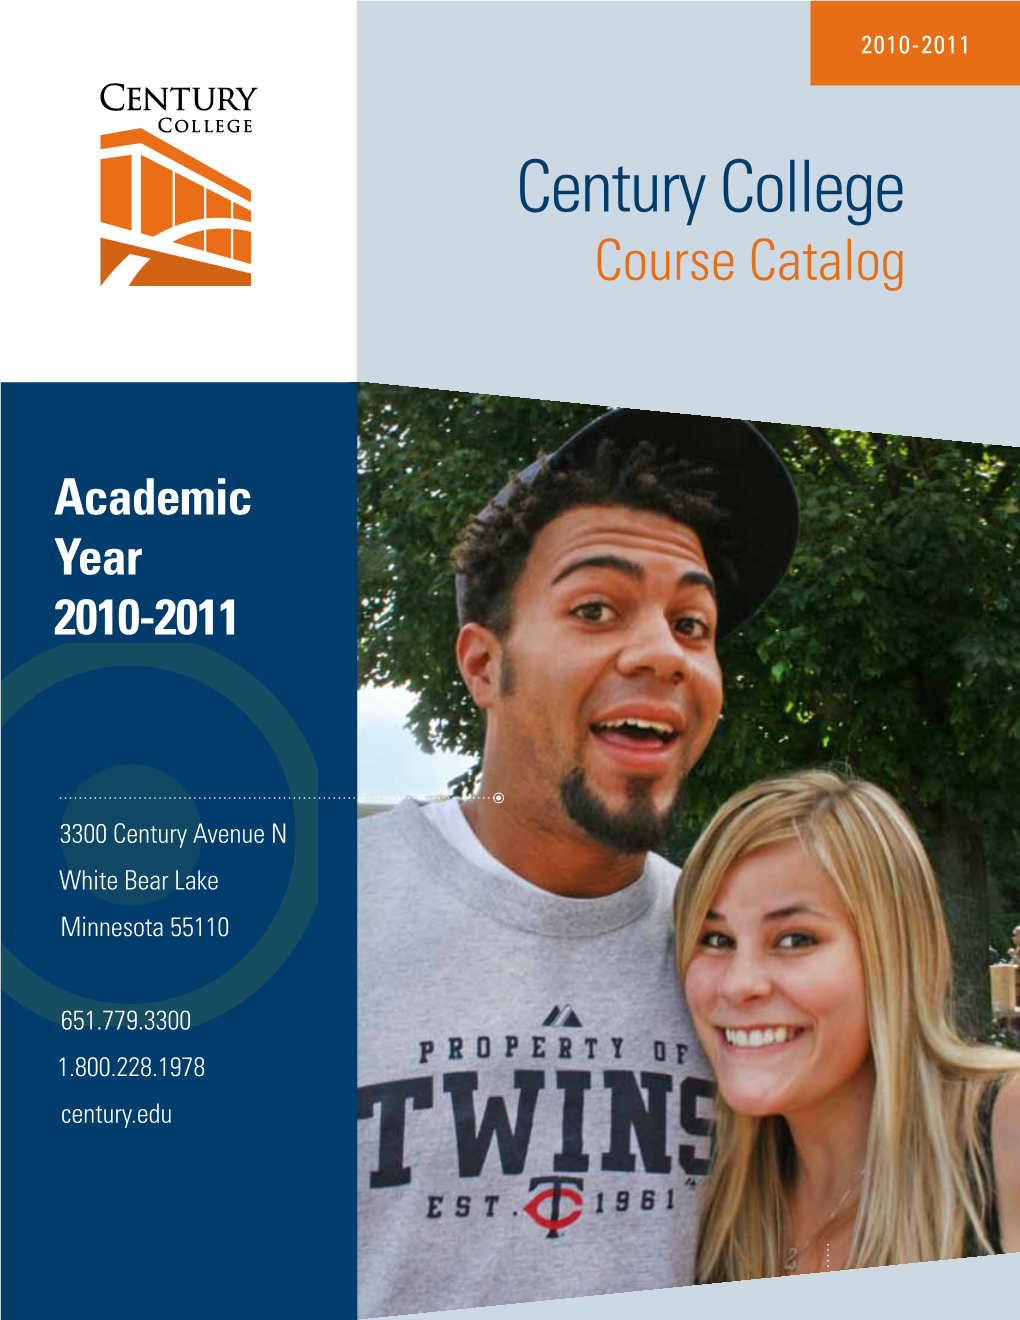 2010-2011 Course Catalog